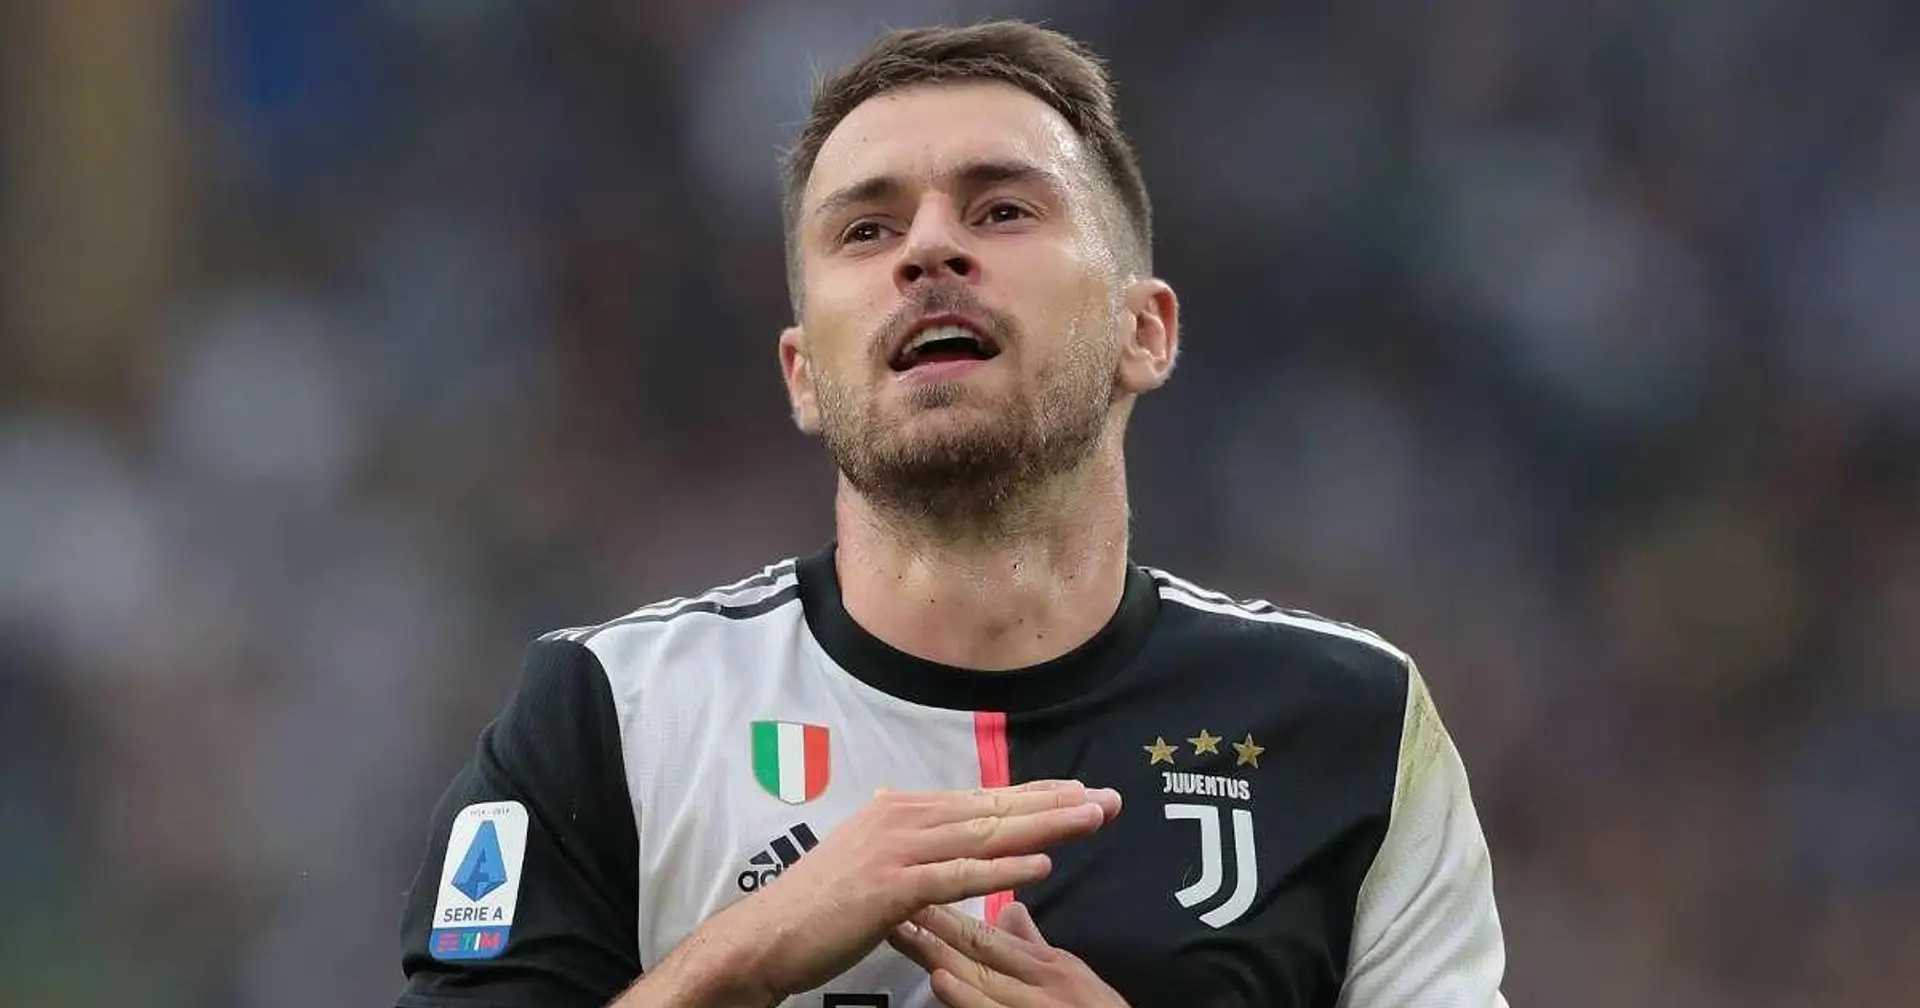 Italian source: Juventus want to terminate Aaron Ramsey's contract